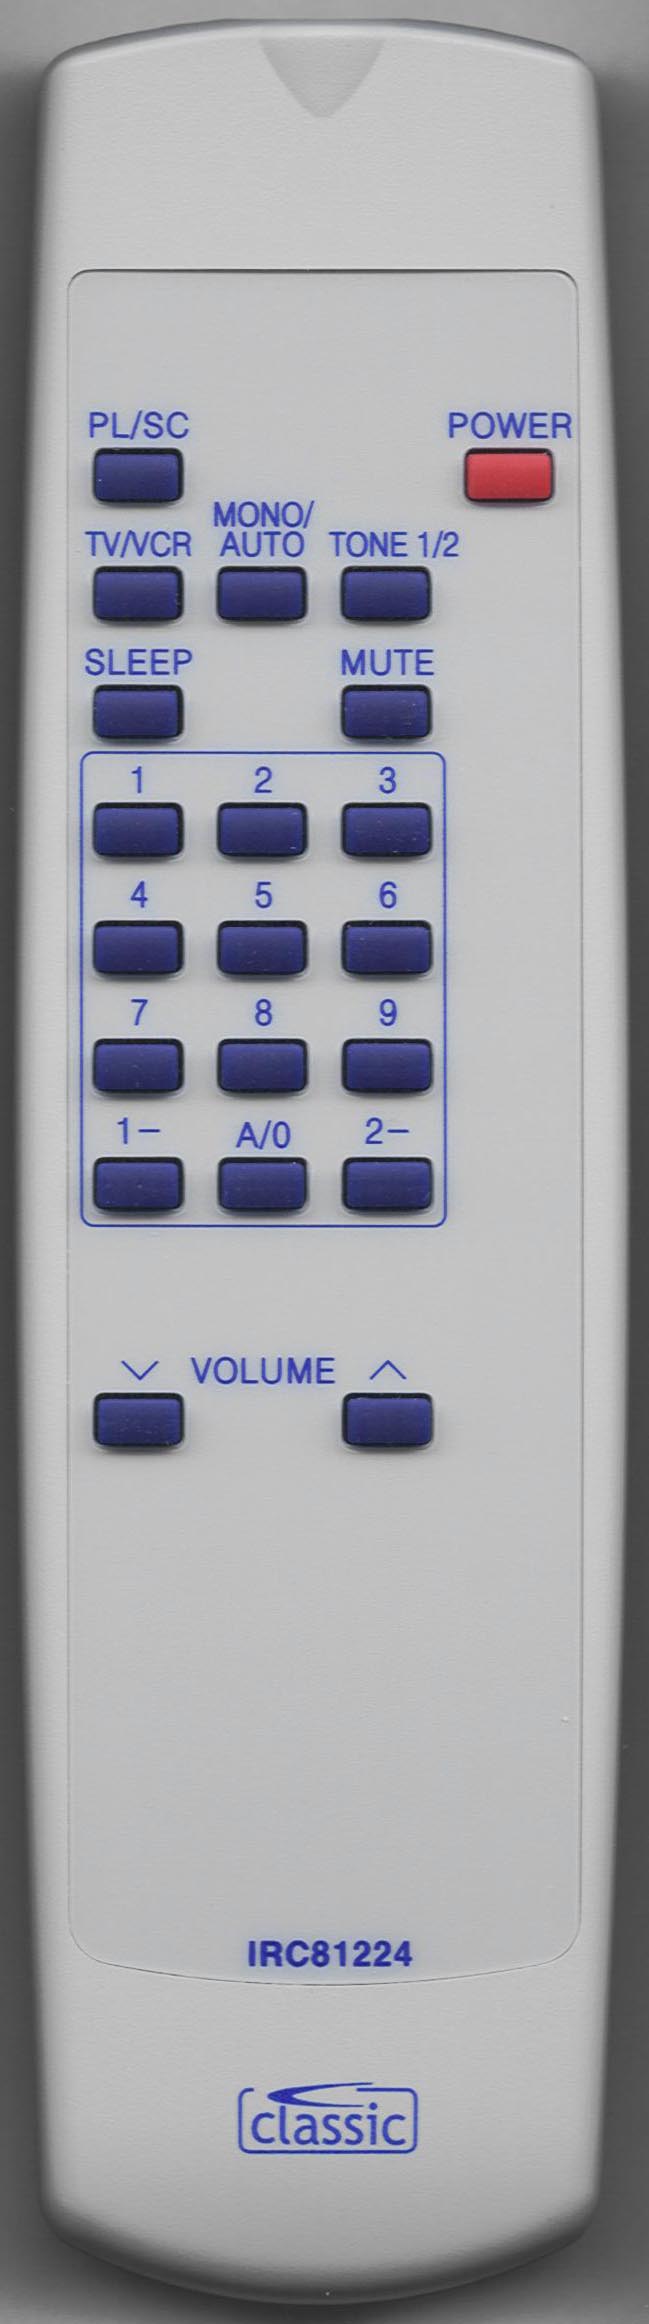 ORION TVP-900 Remote Control